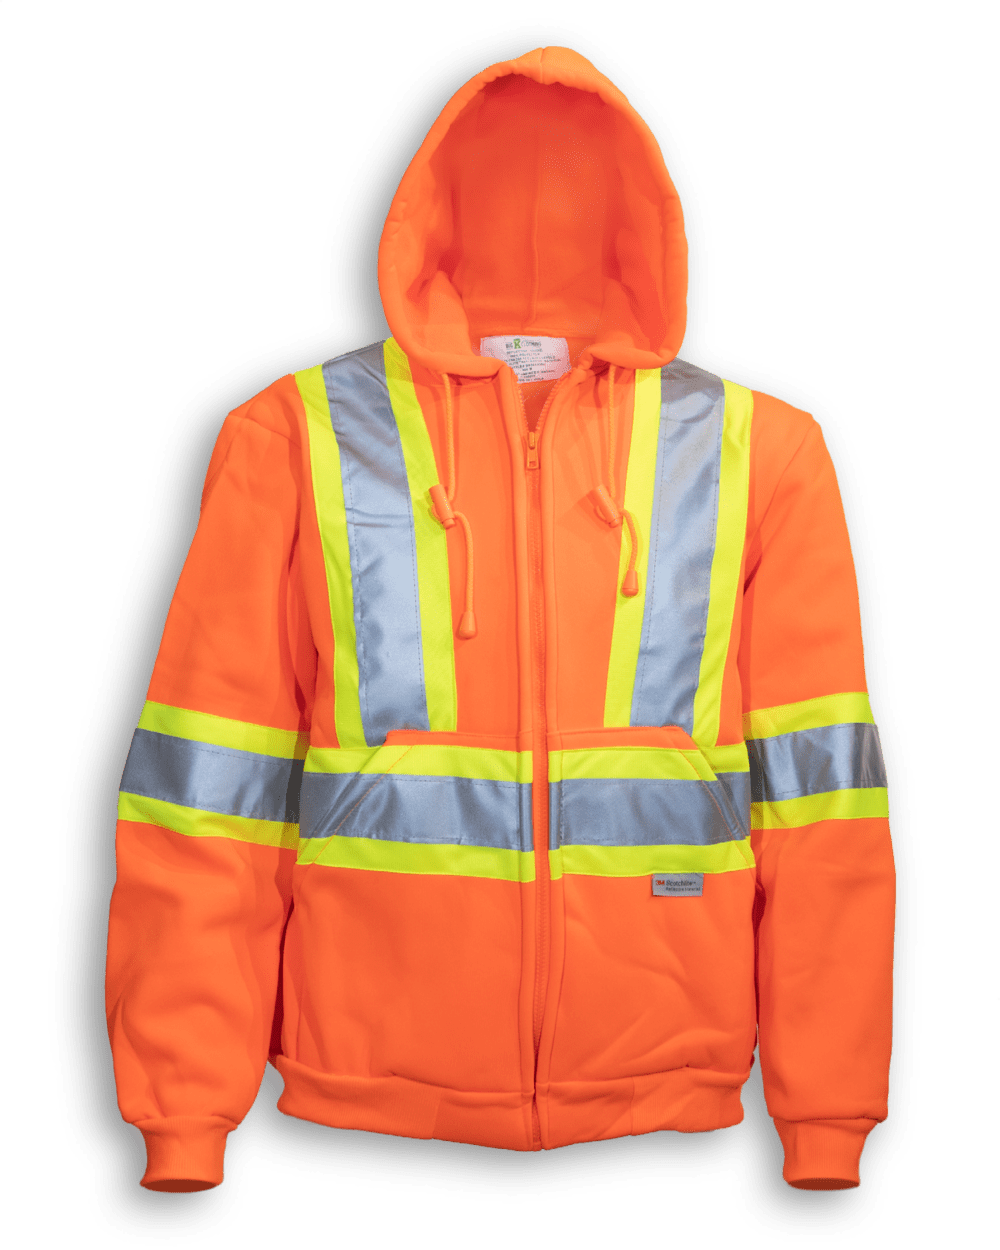 Big K Clothing 100% Polyester Full Zipper Hoodie #BK3552 Safety Orange